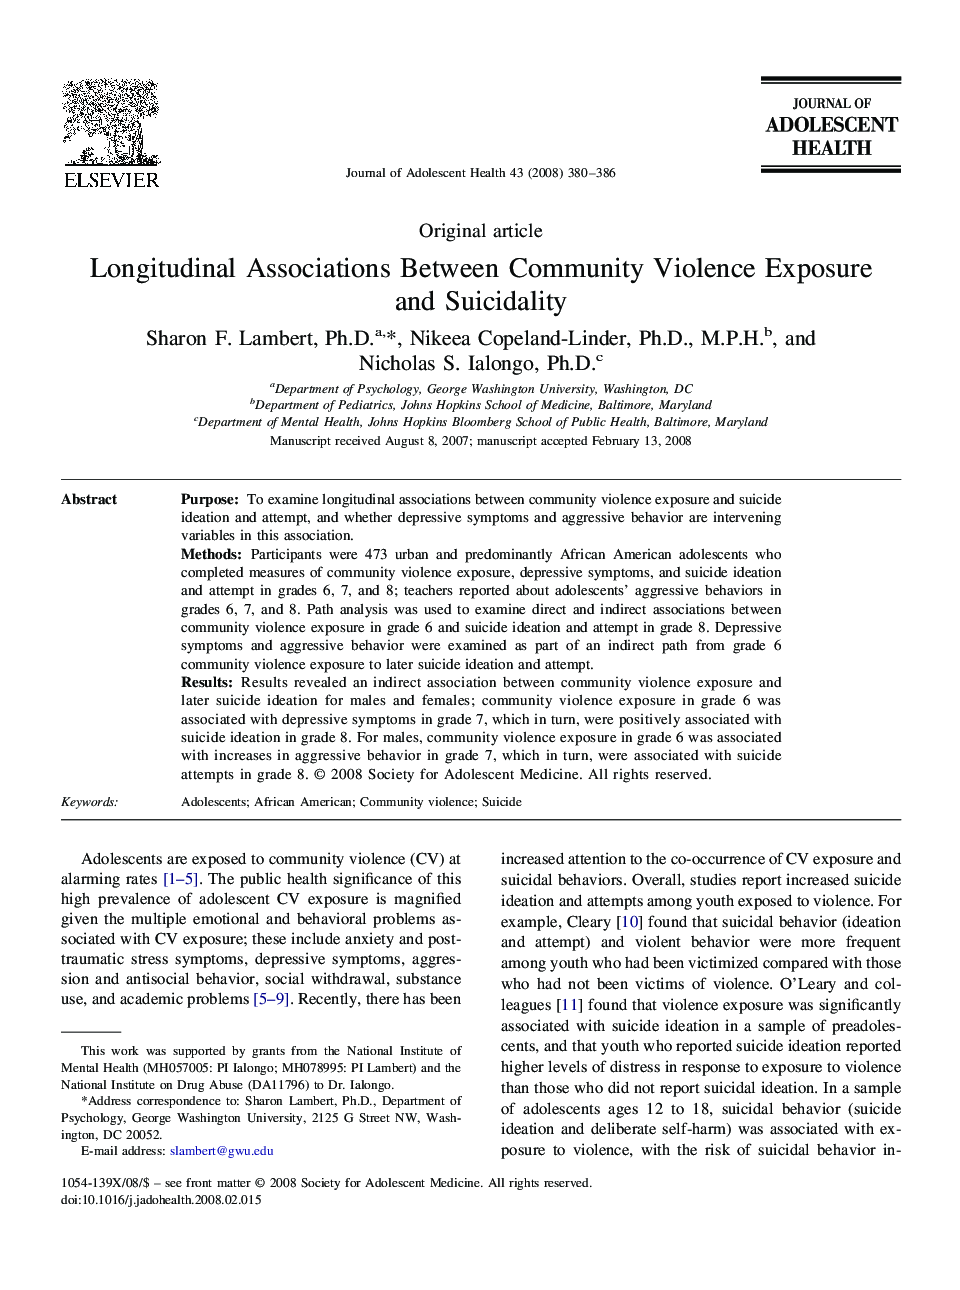 Longitudinal Associations Between Community Violence Exposure and Suicidality 